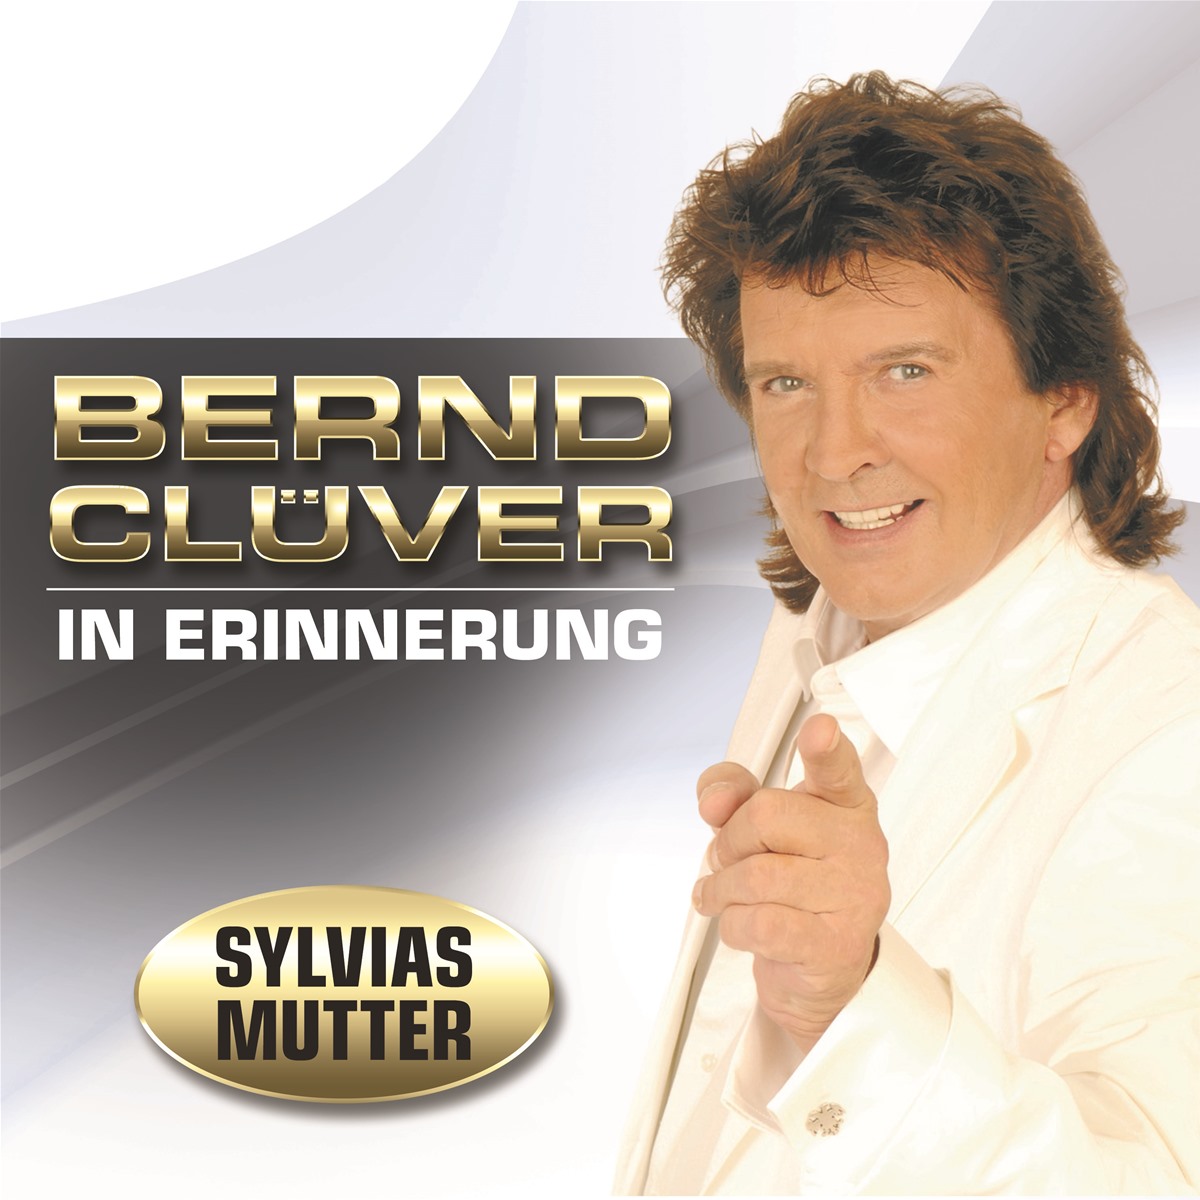 Bernd Clver - Sylvias Mutter - Cover klein.jpeg